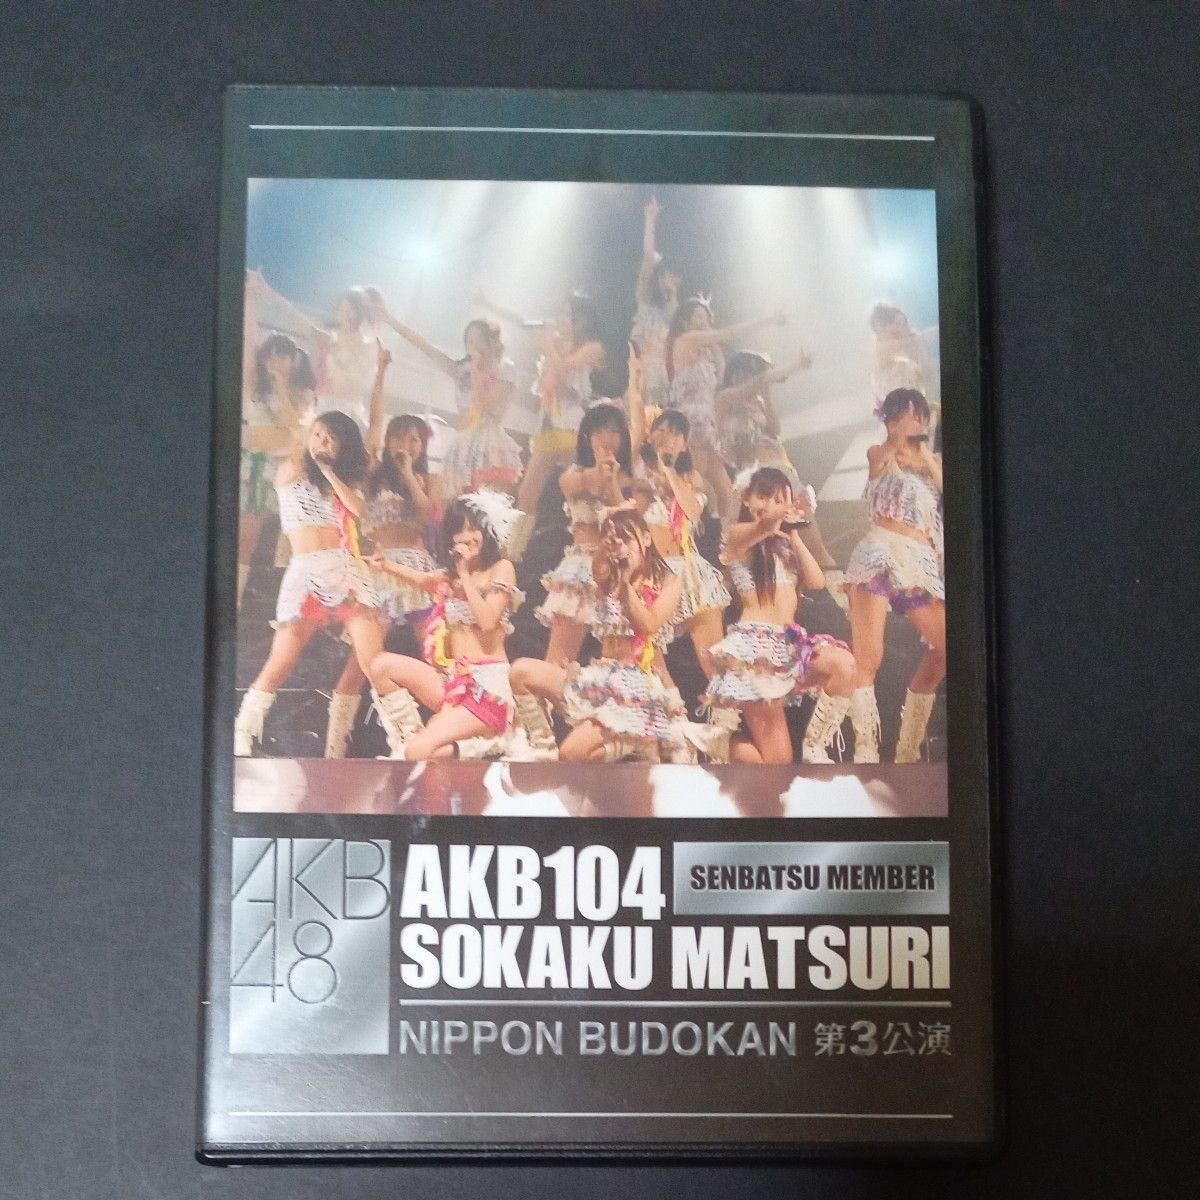 AKB48 AKB104 SOKAKU MATSURI NIPPON BUDOKAN 第3公演